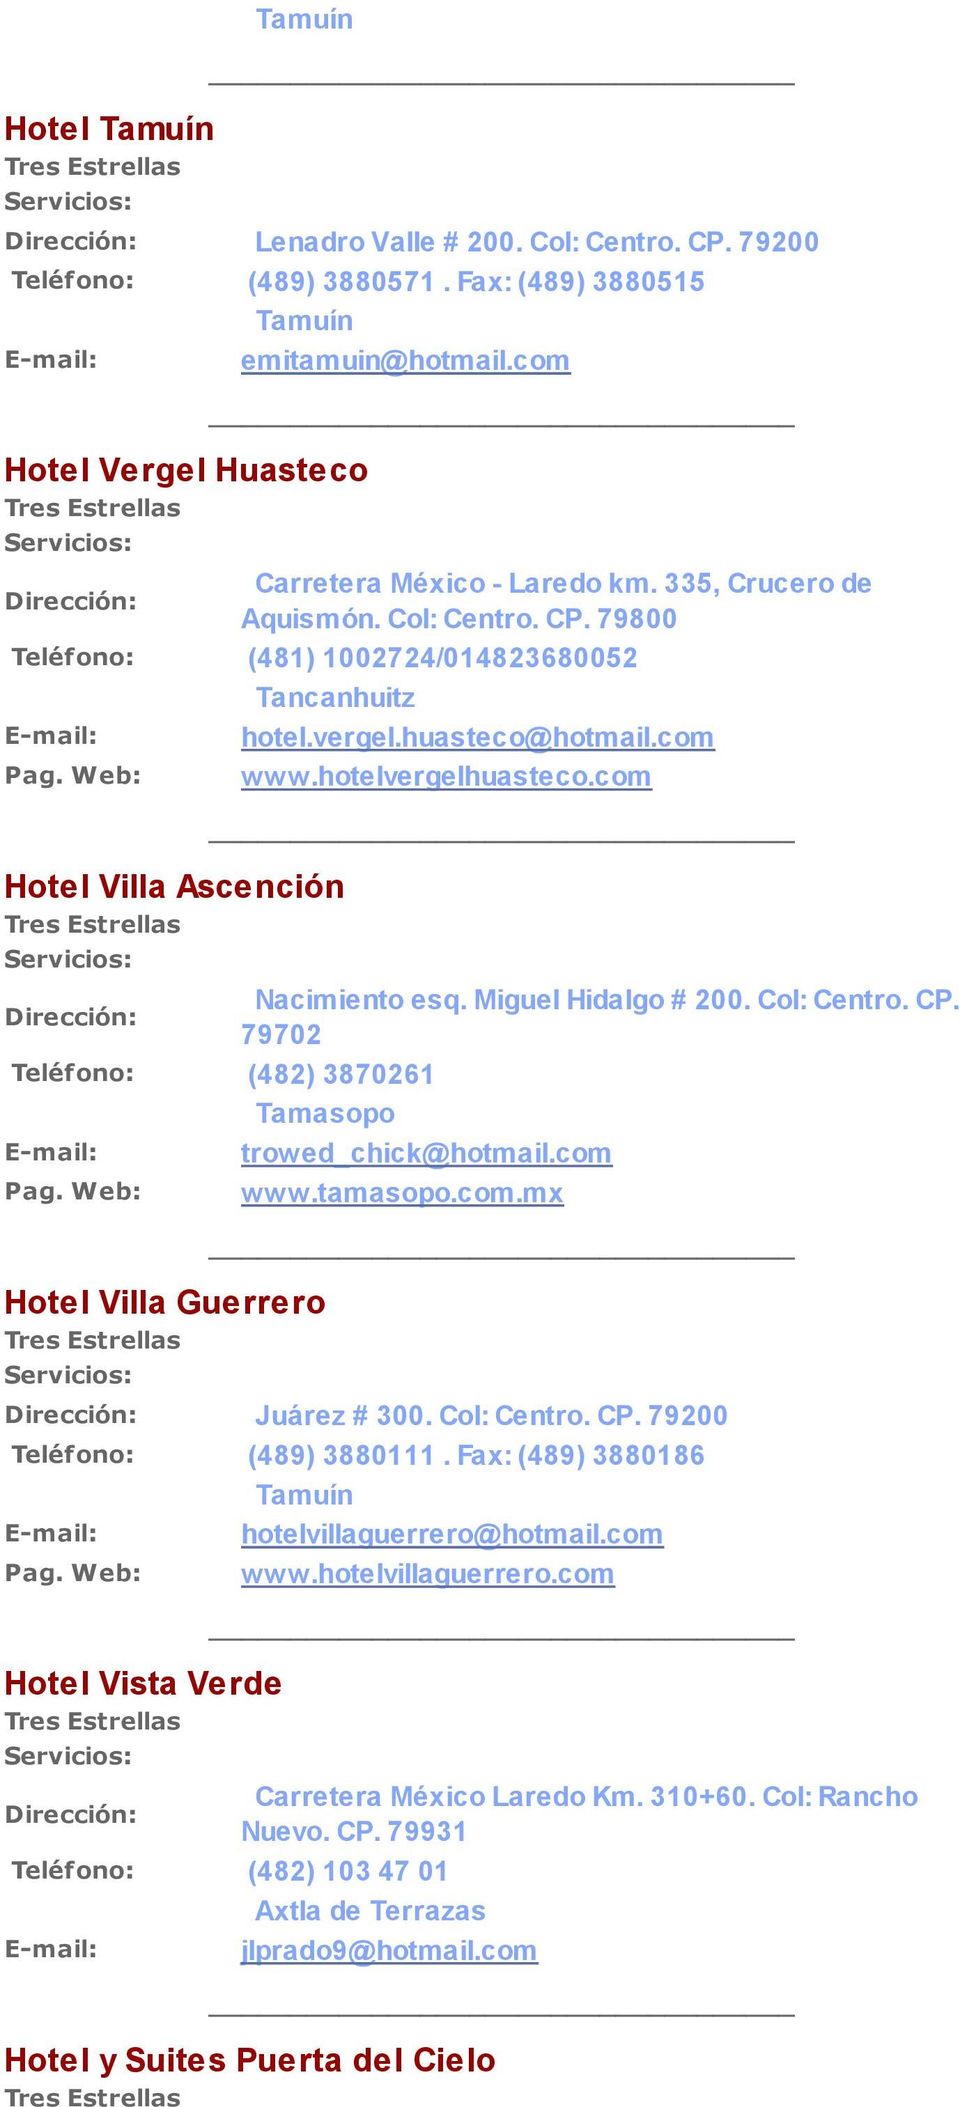 Miguel Hidalgo # 200. Col: Centro. CP. 79702 Teléfono: (482) 3870261 Hotel Villa Guerrero trowed_chick@hotmail.com www.tamasopo.com.mx Juárez # 300. Col: Centro. CP. 79200 Teléfono: (489) 3880111.